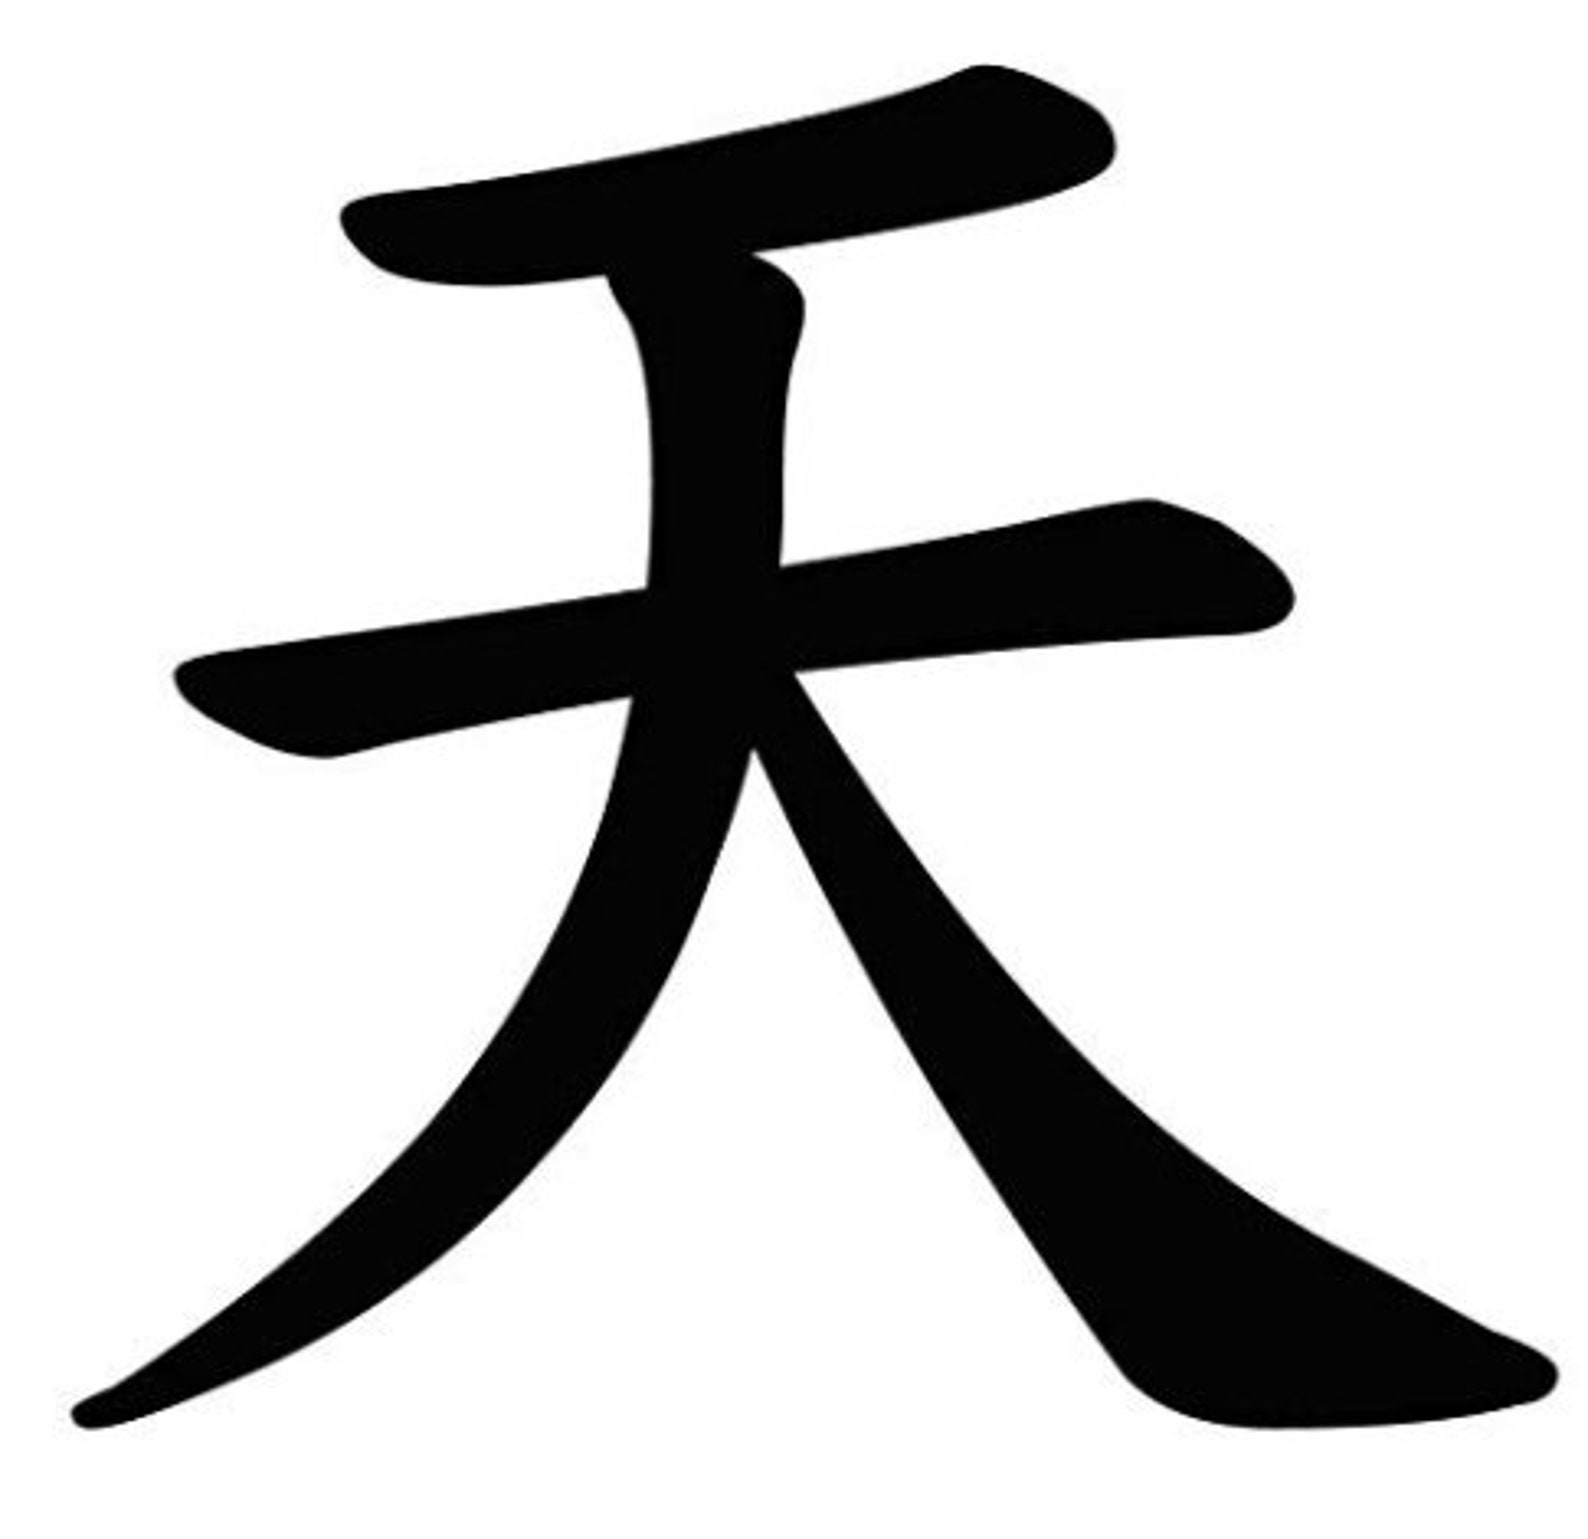 japanese kanji characters